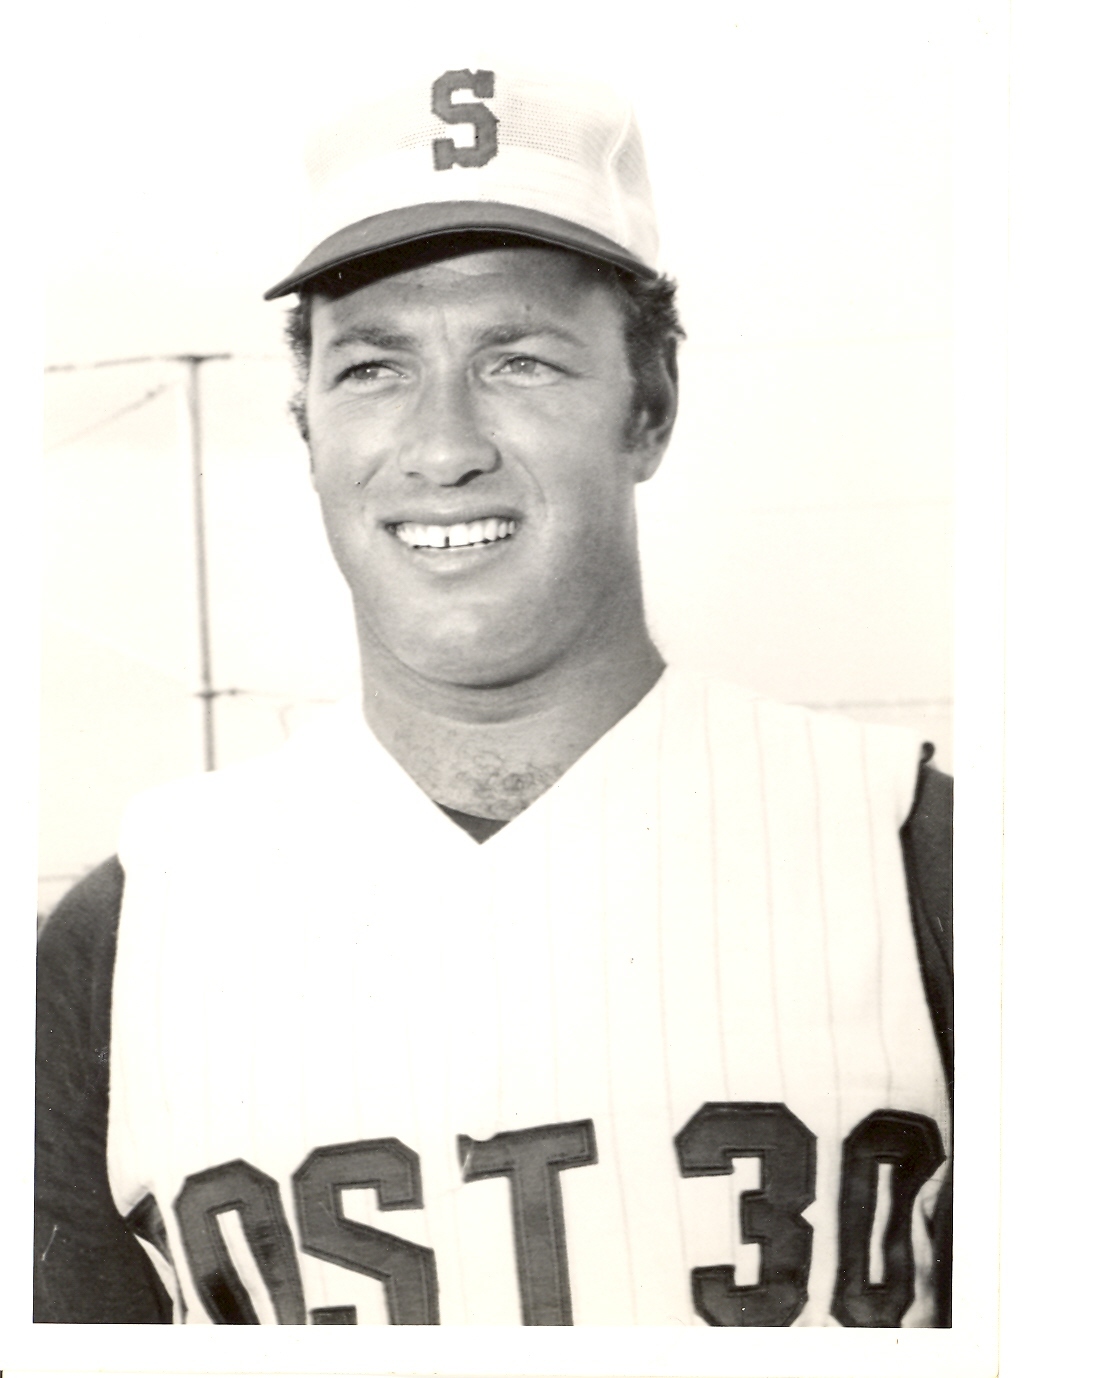 Courtesy photo. Eddie Howell served as a baseball coach, football coach and administrator at Sarasota High School.